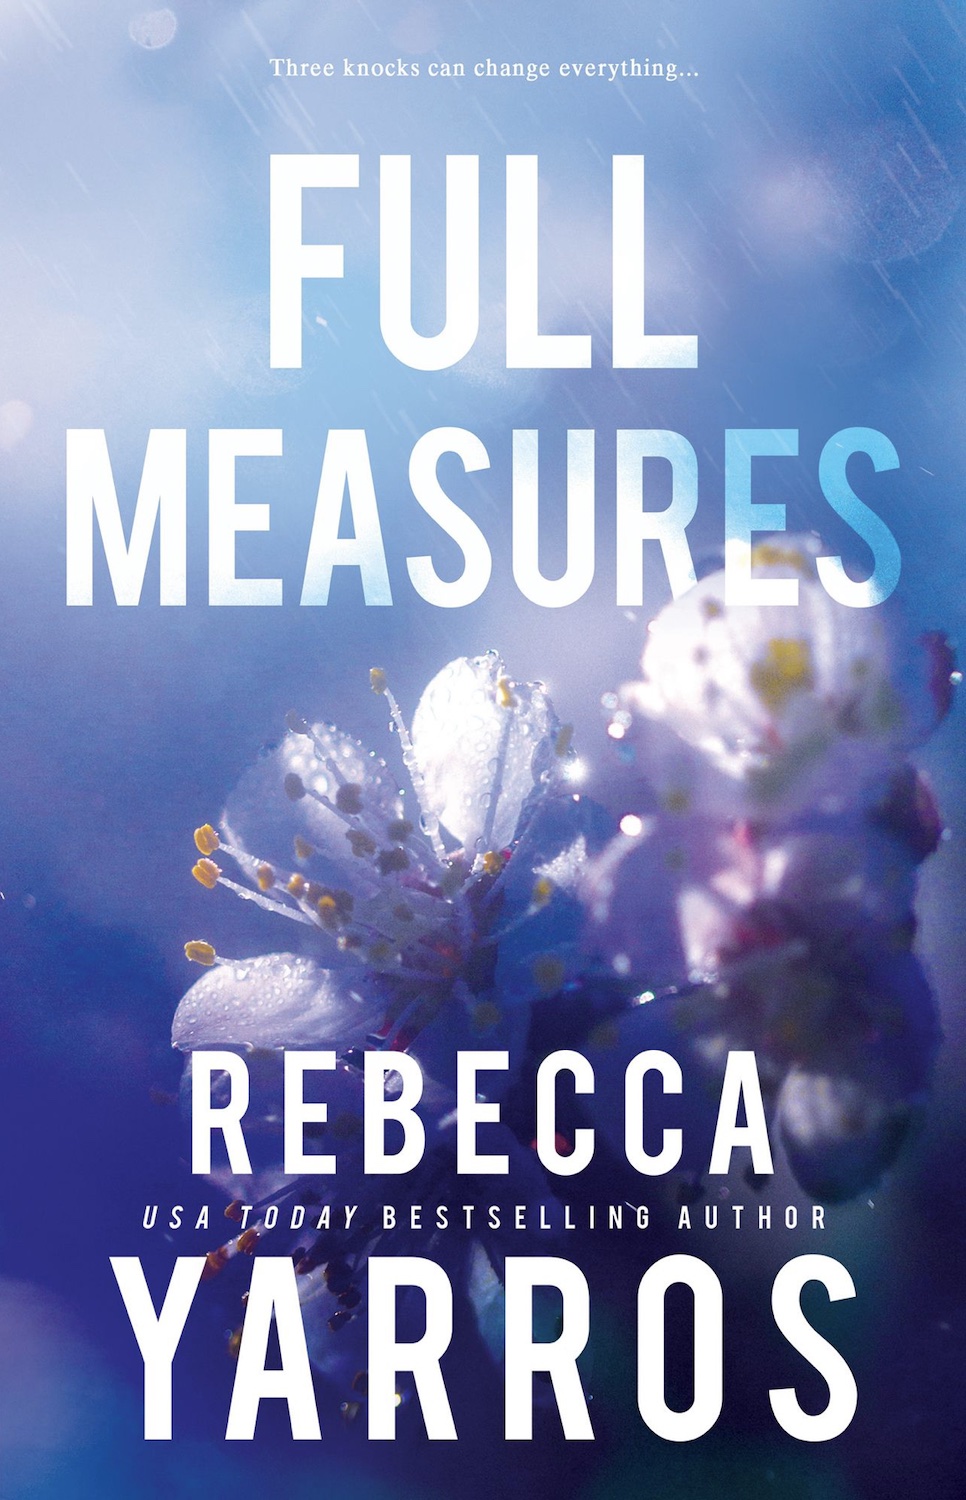 Full Measures by Rebecca Yarros